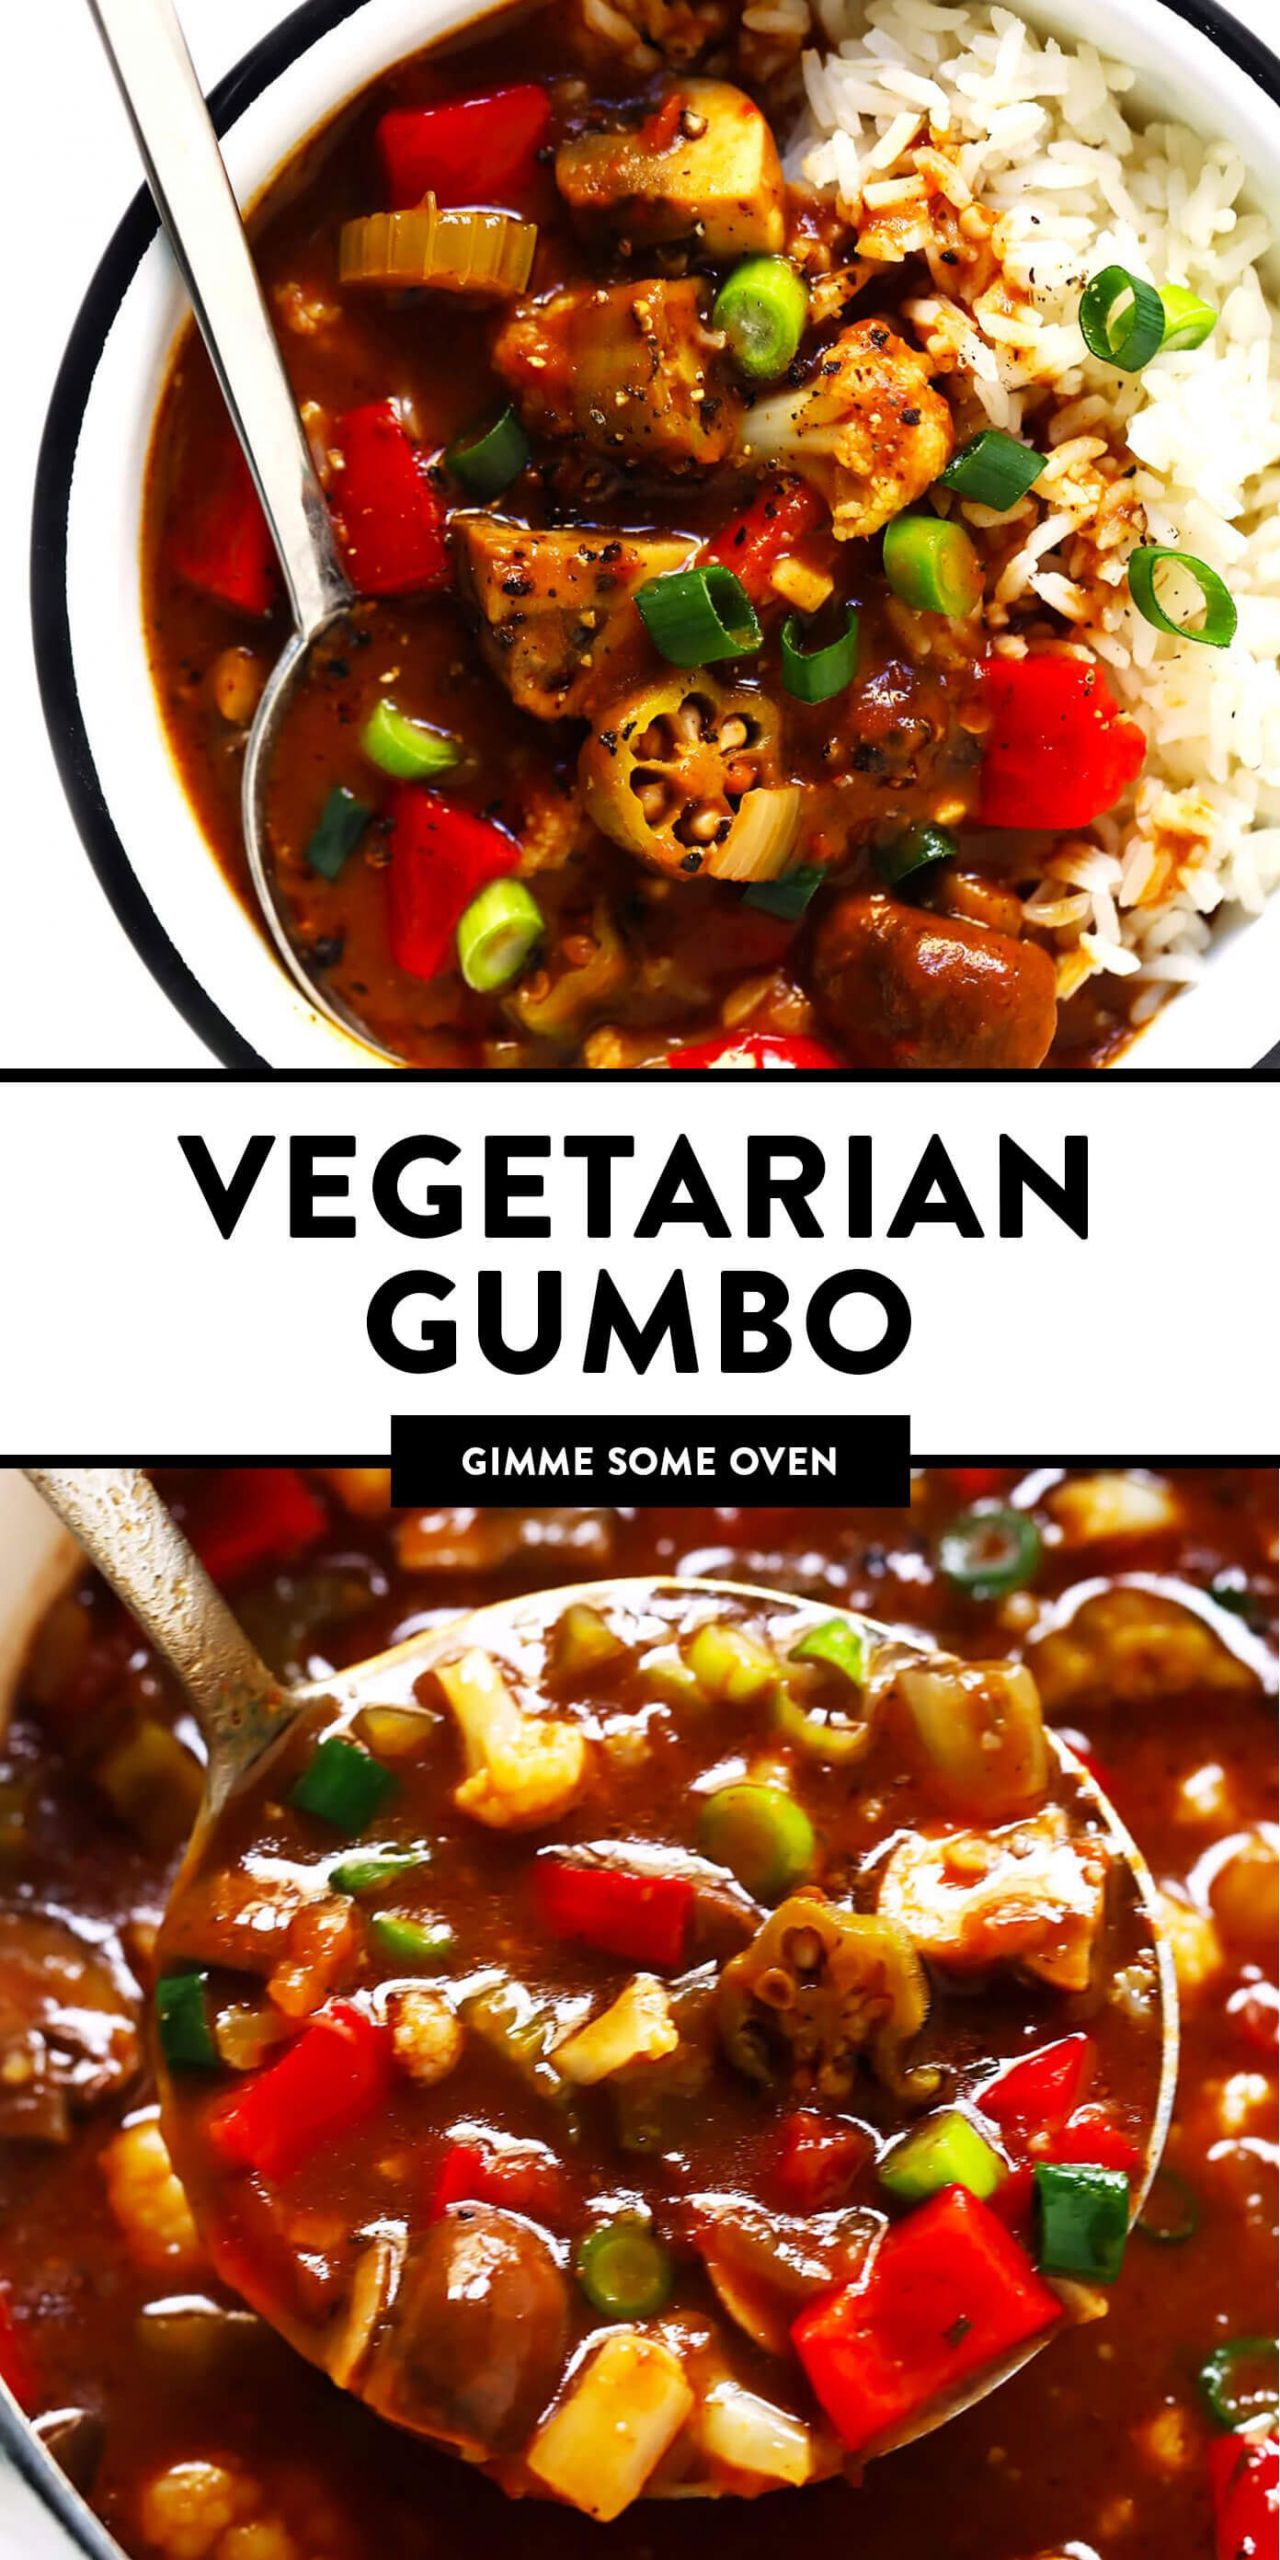 Vegetarian Gumbo Recipes
 Ve arian Gumbo Recipe in 2020